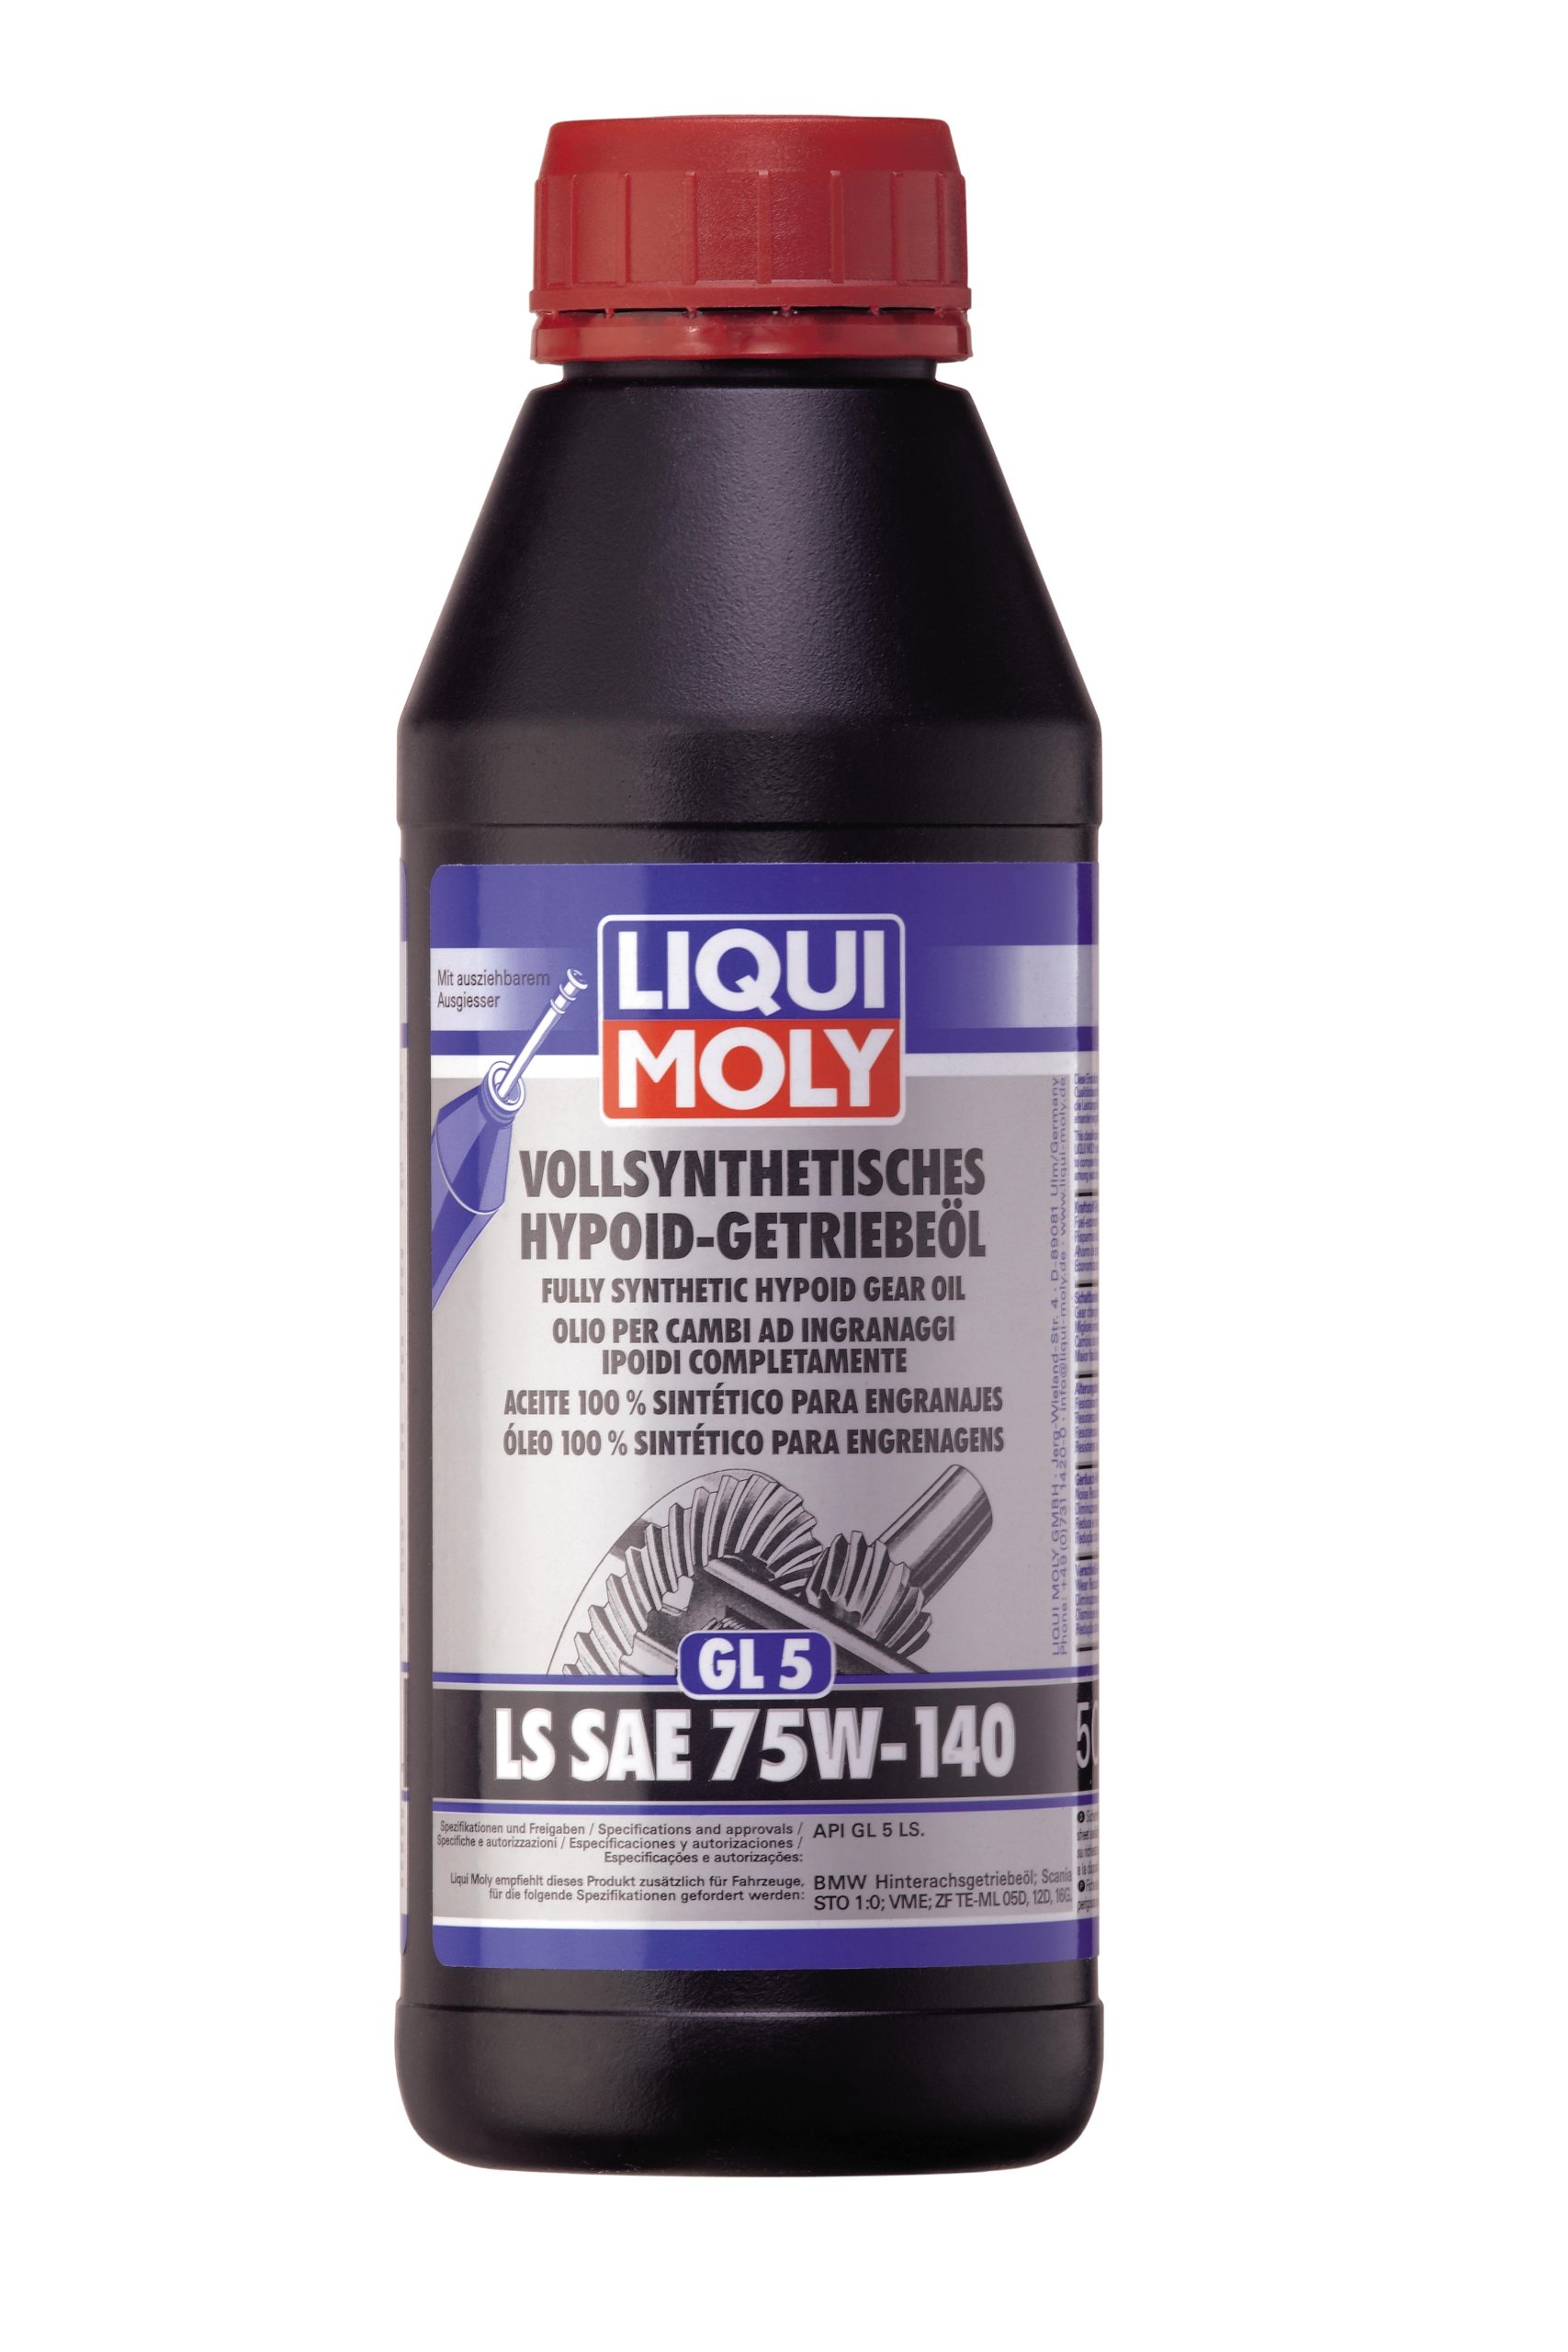 LIQUI MOLY Vollsynthetisches Hypoid-Getriebeöl (GL5) LS SAE 75W-140 | 500 ml | Getriebeöl | Hydrauliköl | Art.-Nr.: 4420 von Liqui Moly